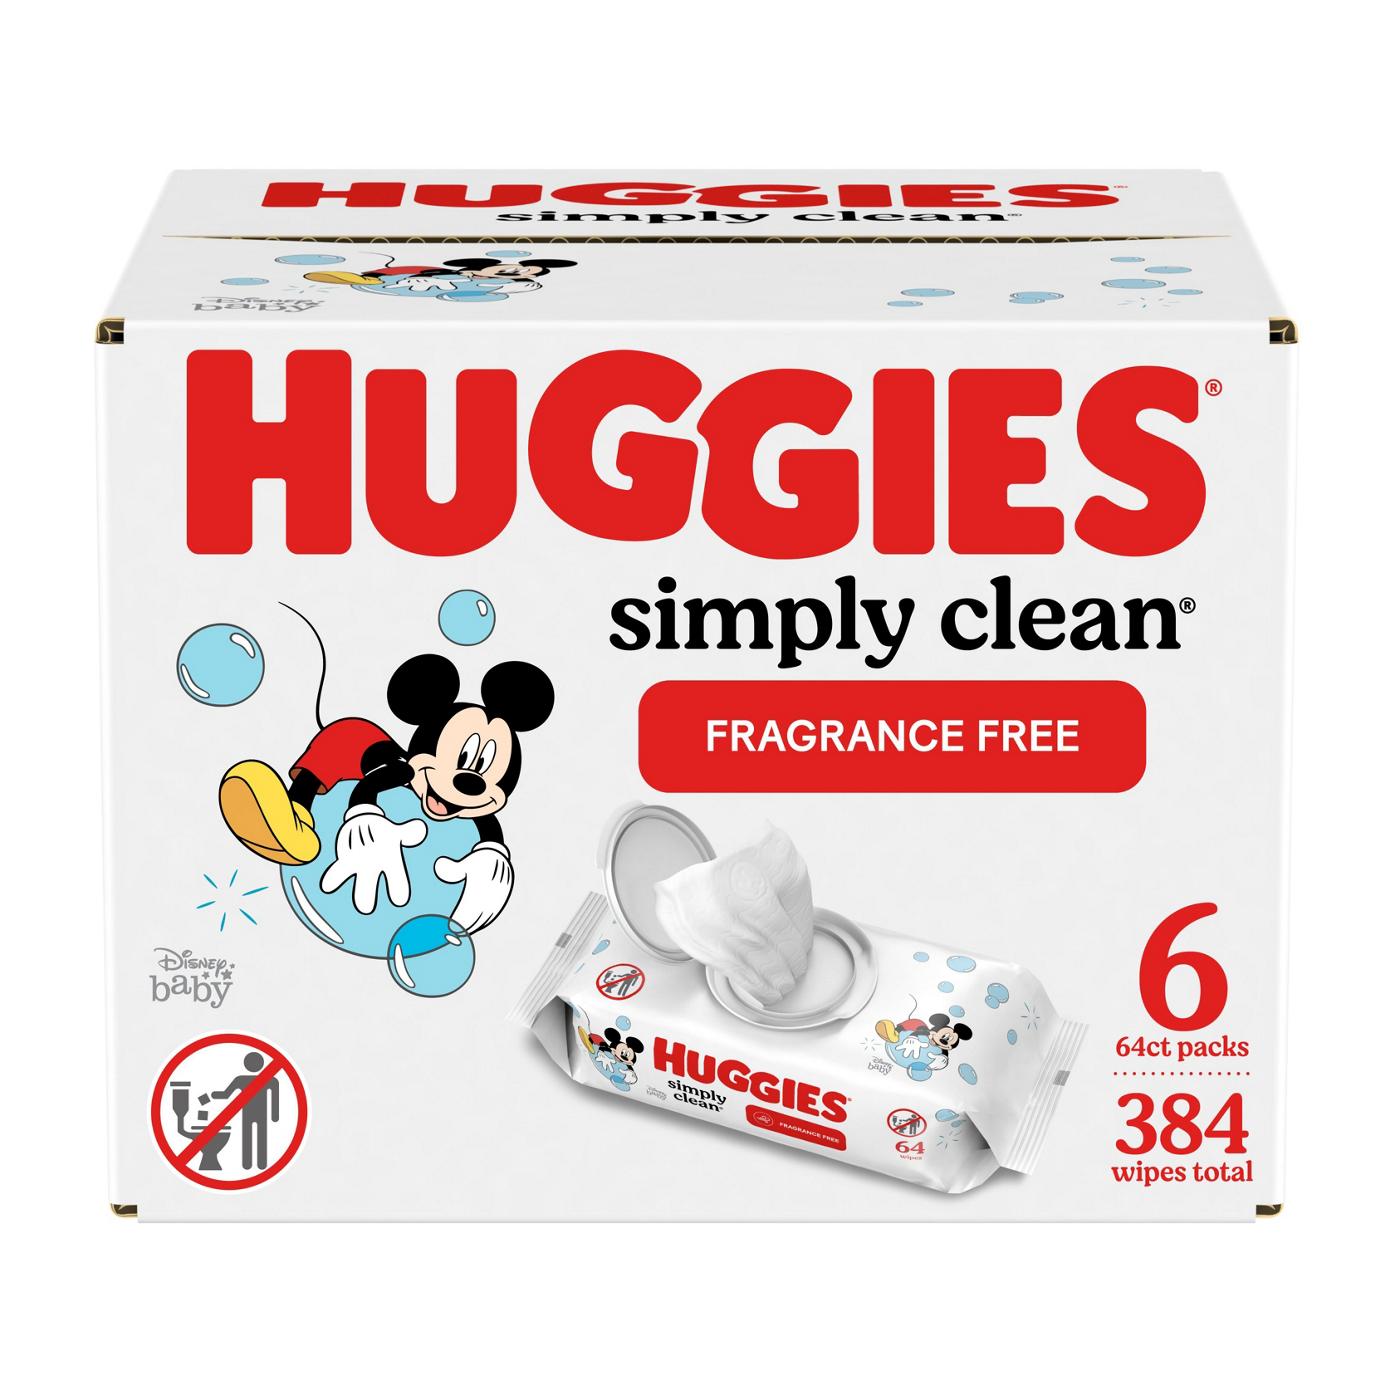 Huggies Simply Clean Fragrance Free Baby Wipes 6 pk; image 1 of 2